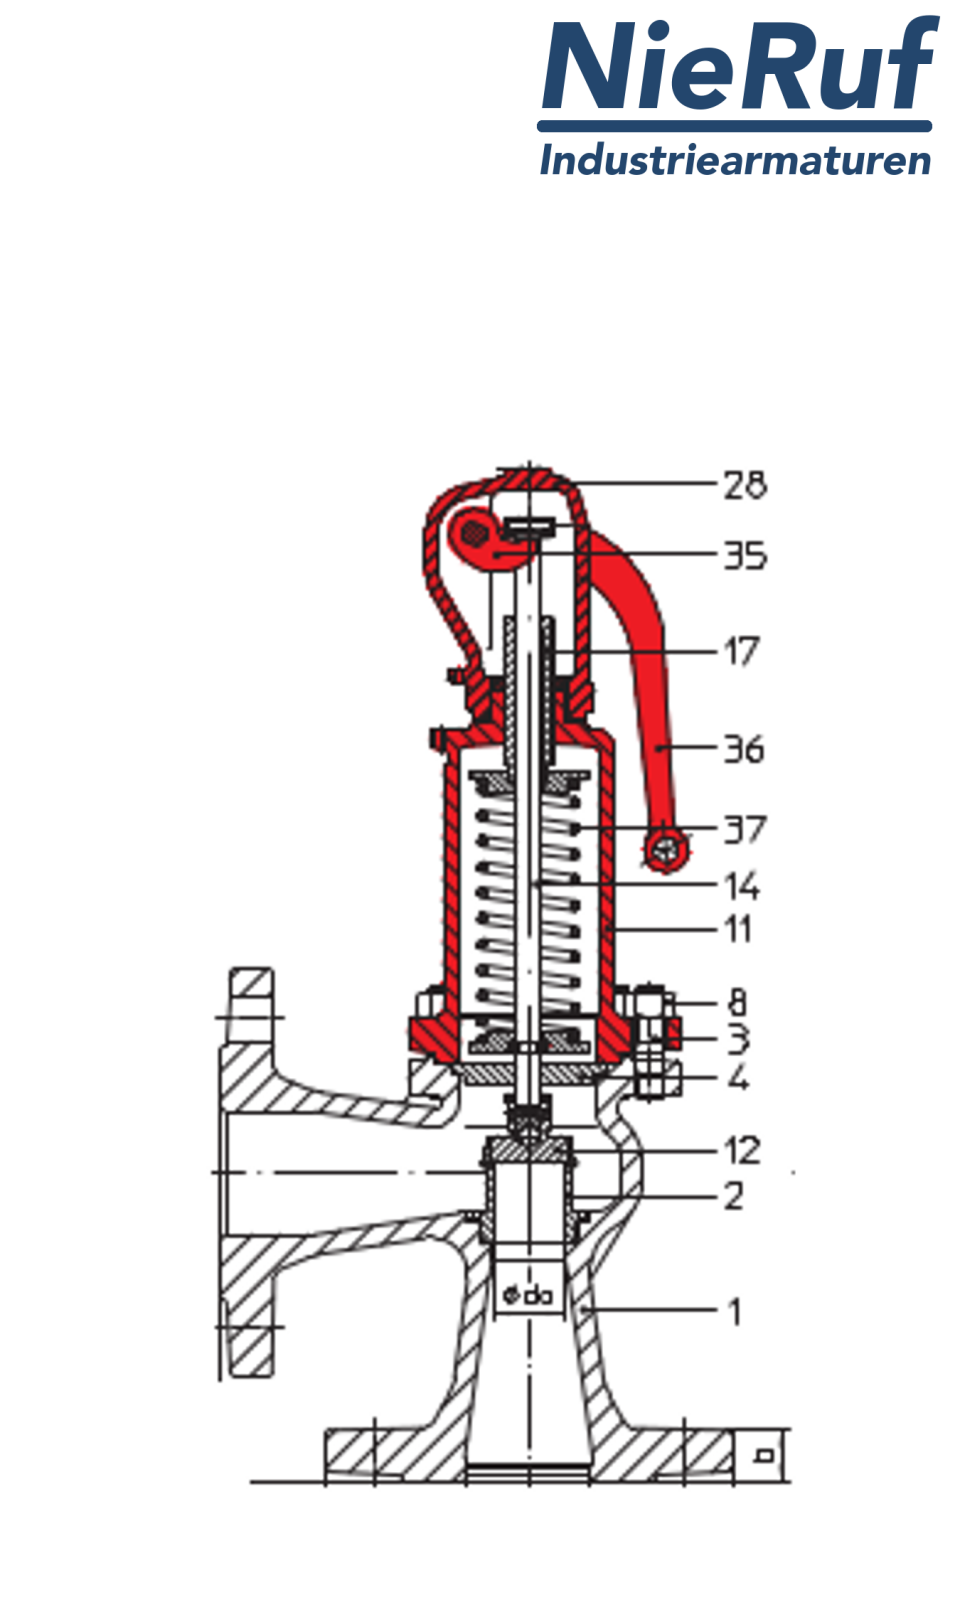 flange-safety valve DN50/DN50 SF02, cast steel 1.0619+N FPM, with lever